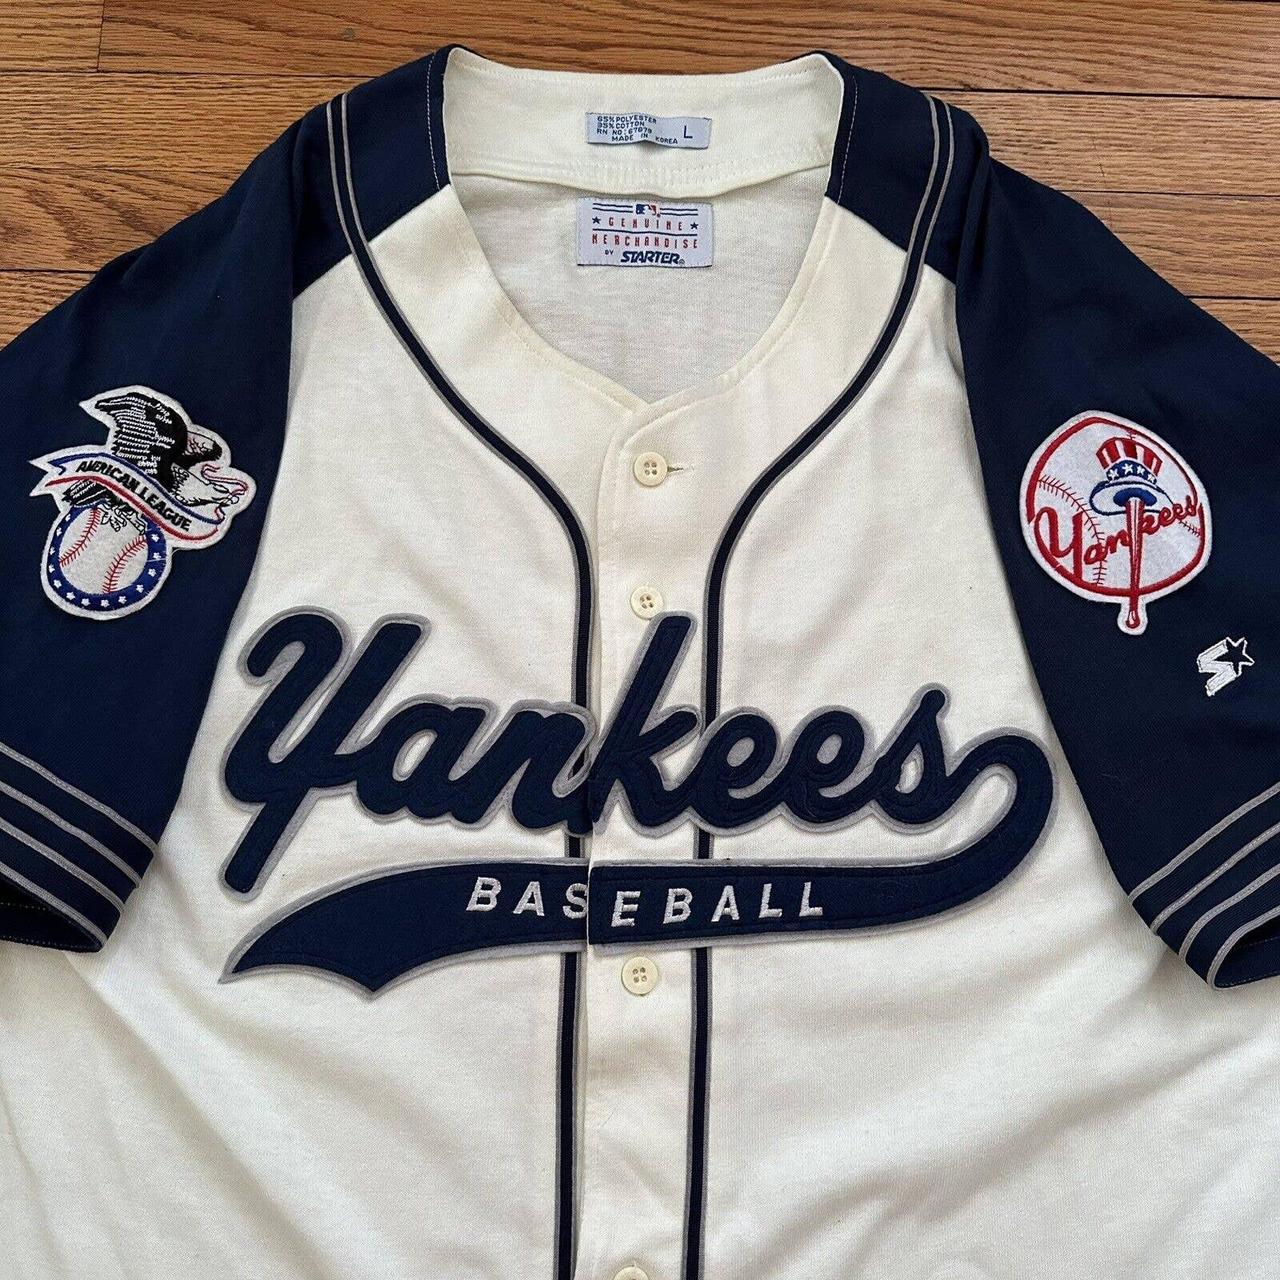 Vintage Yankees starter baseball jersey size medium $50 SOLD